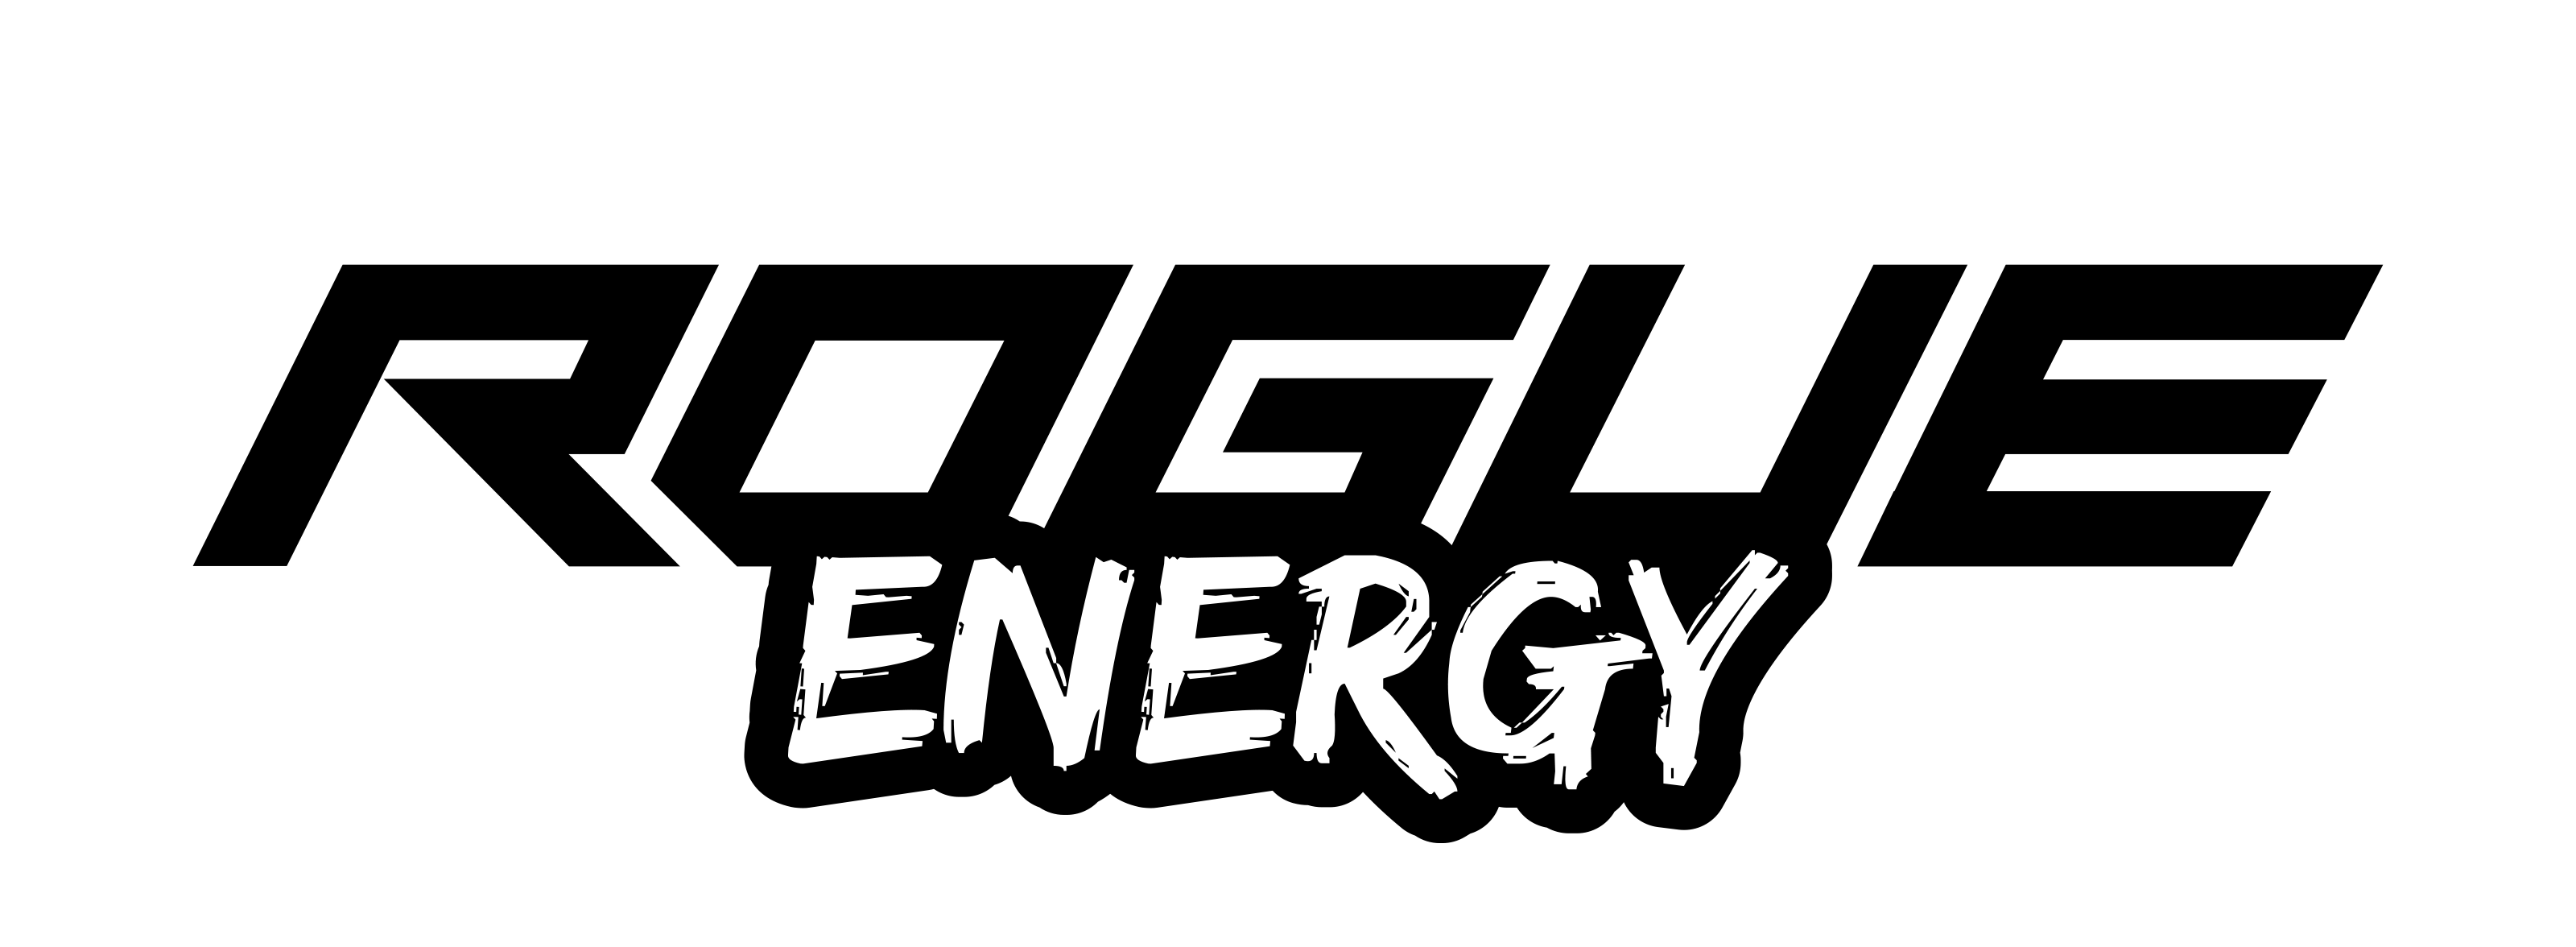 Ng Energy Logo - Xoxo Therapy